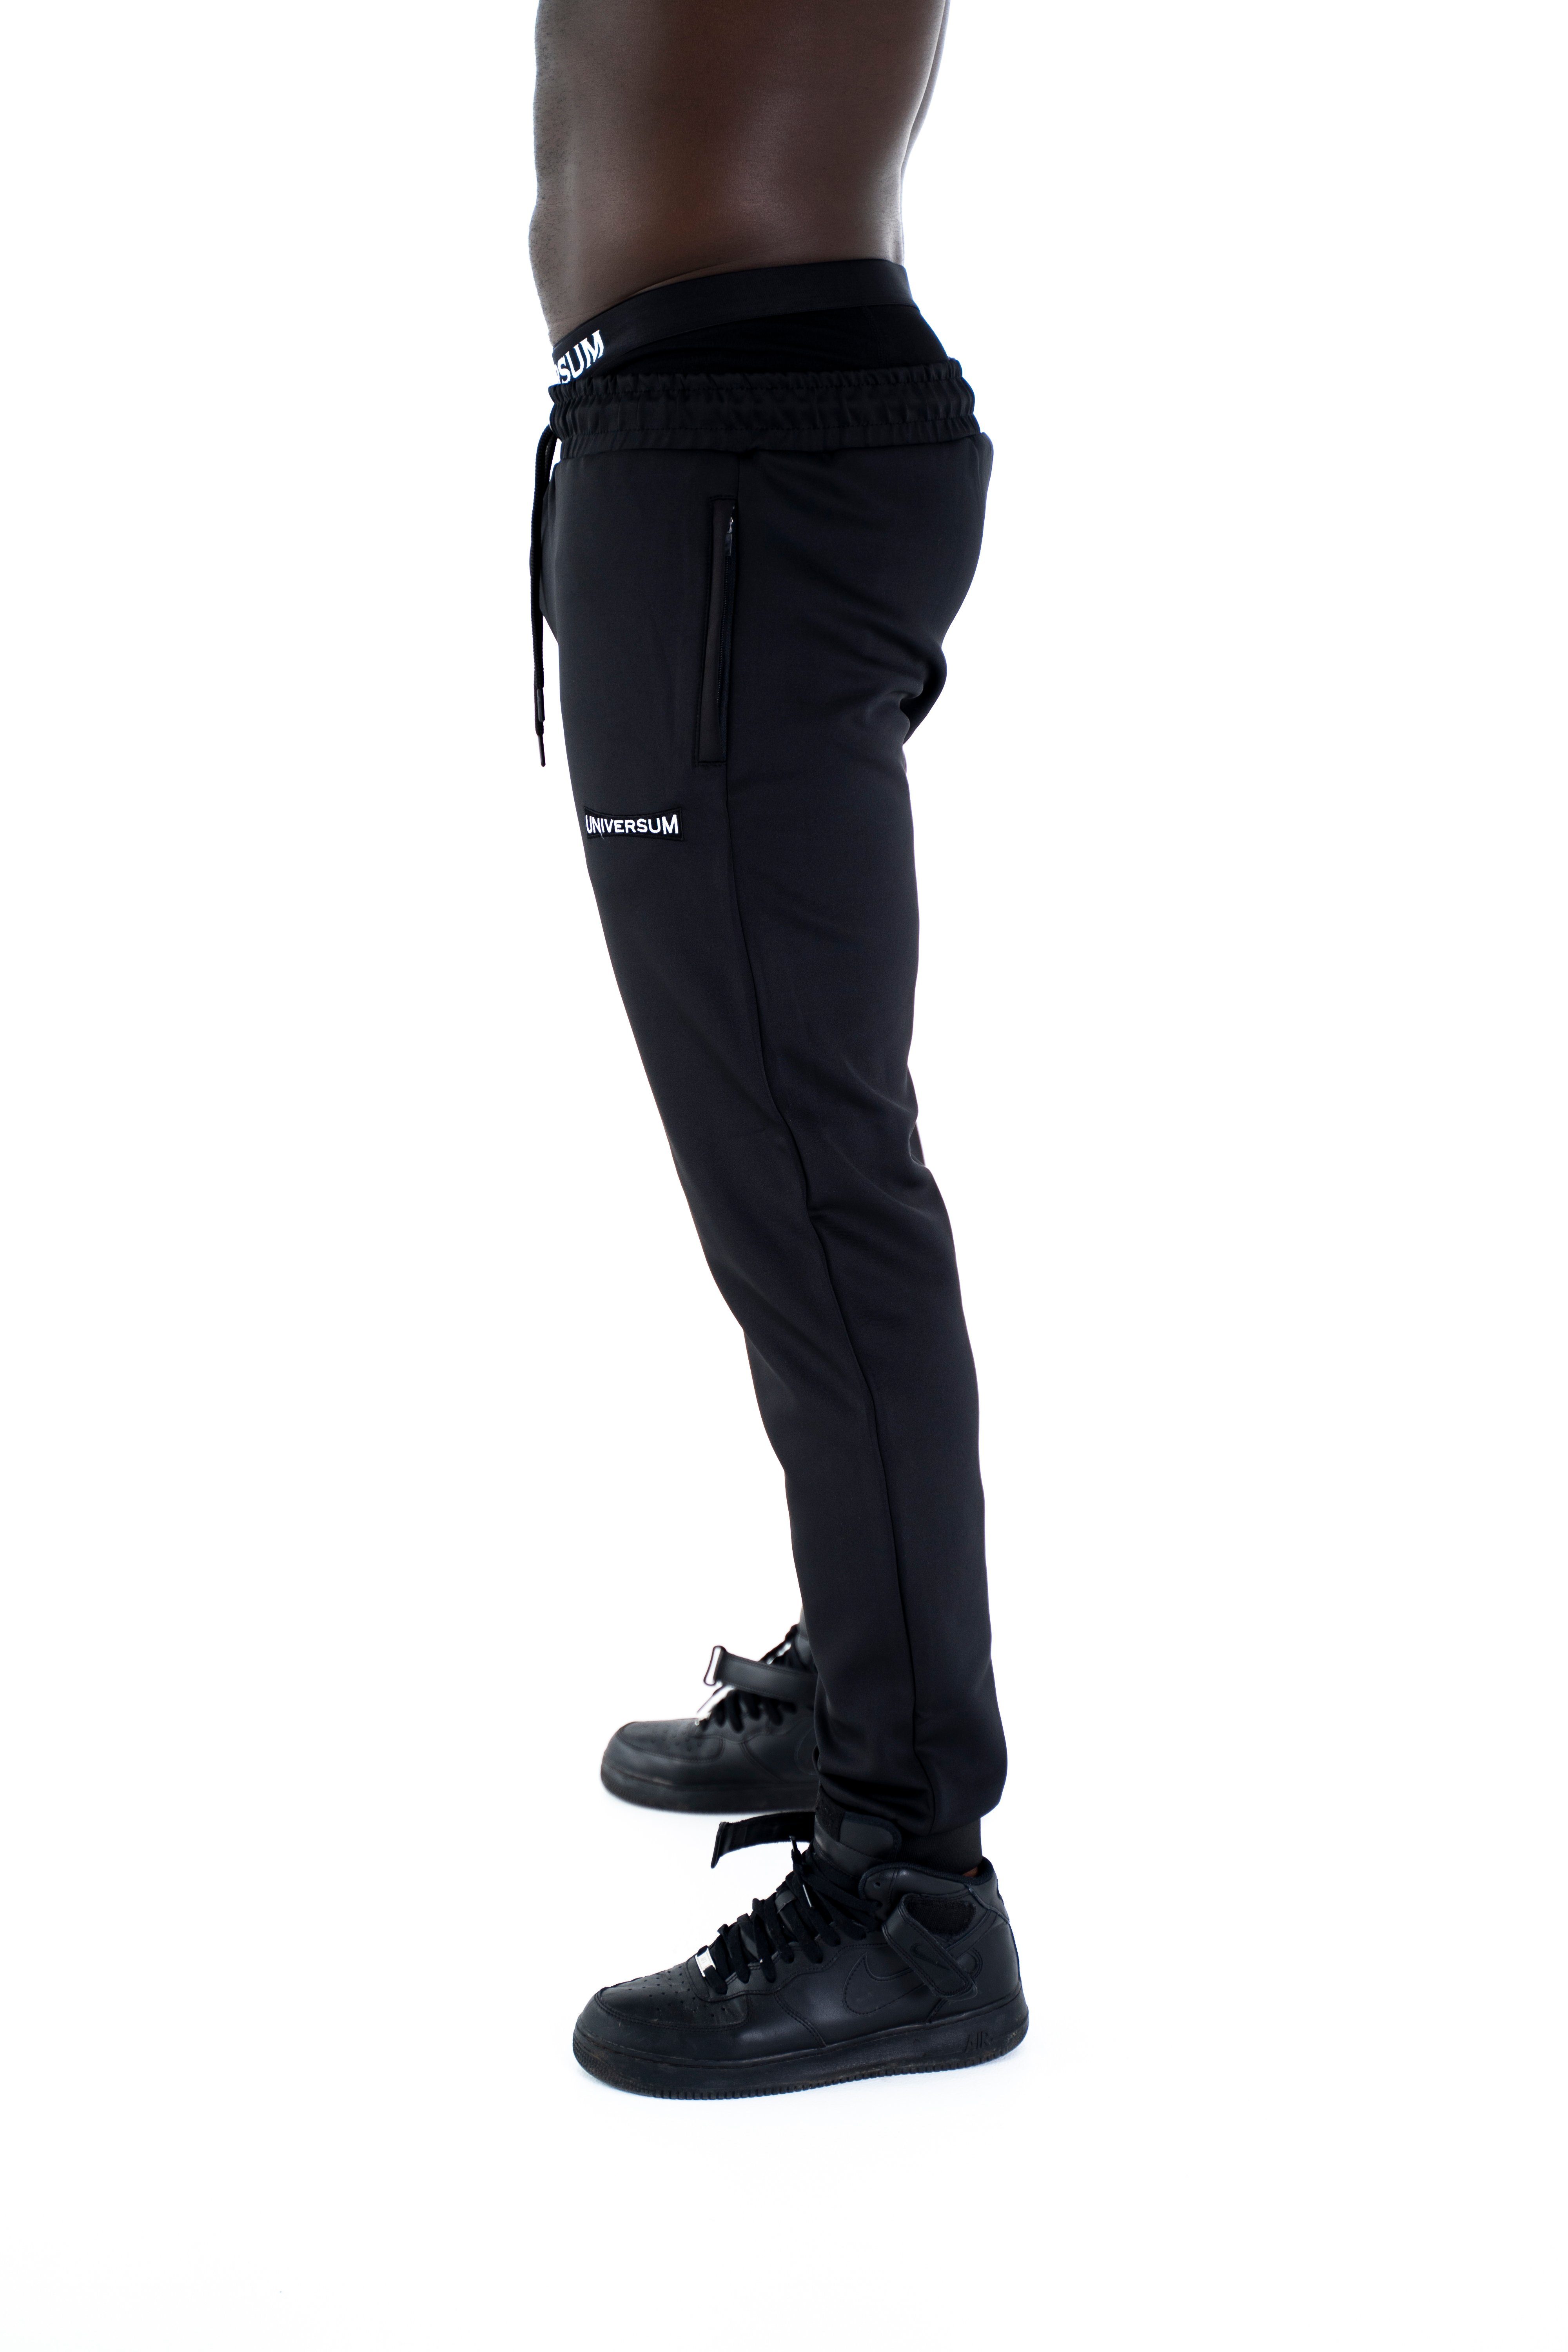 Universum Sportwear Jogginghose Modern Fit Pants für Sport, Freizeit Fitness und schwarz Jogginghose